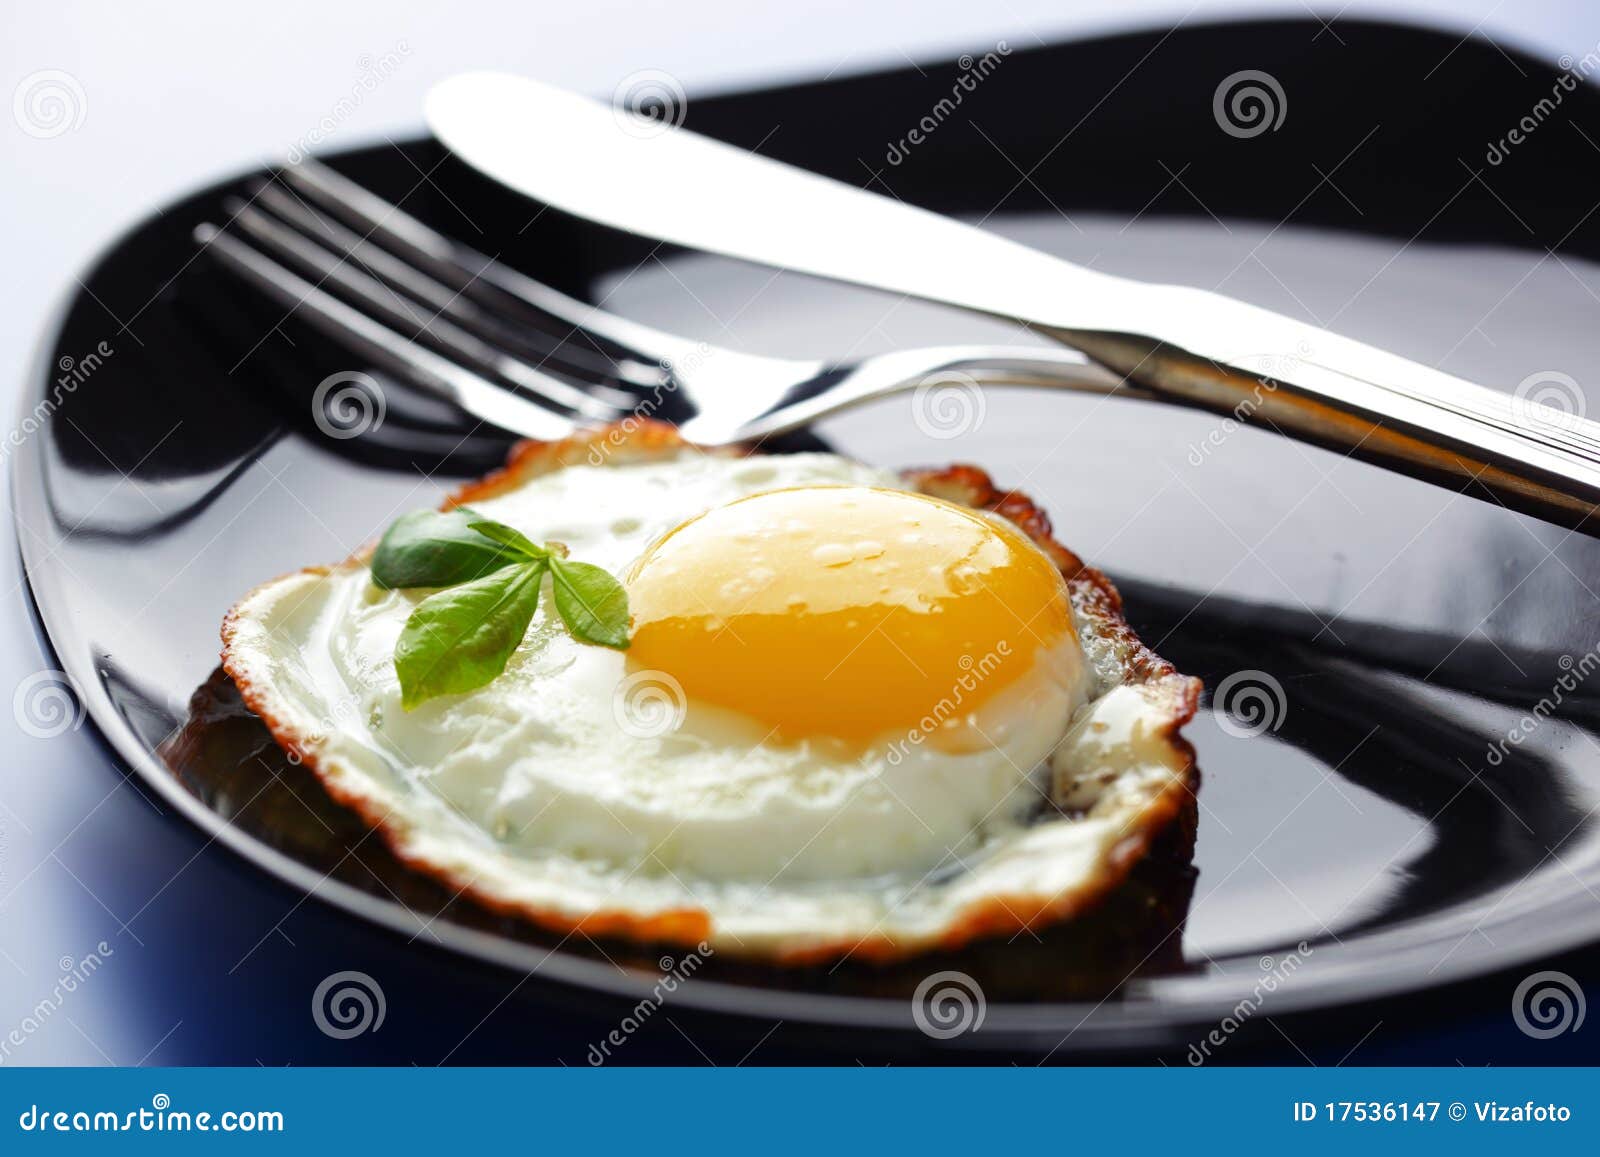 Scrambled eggs stock image. Image of dining, nobody, ingredient - 17536147